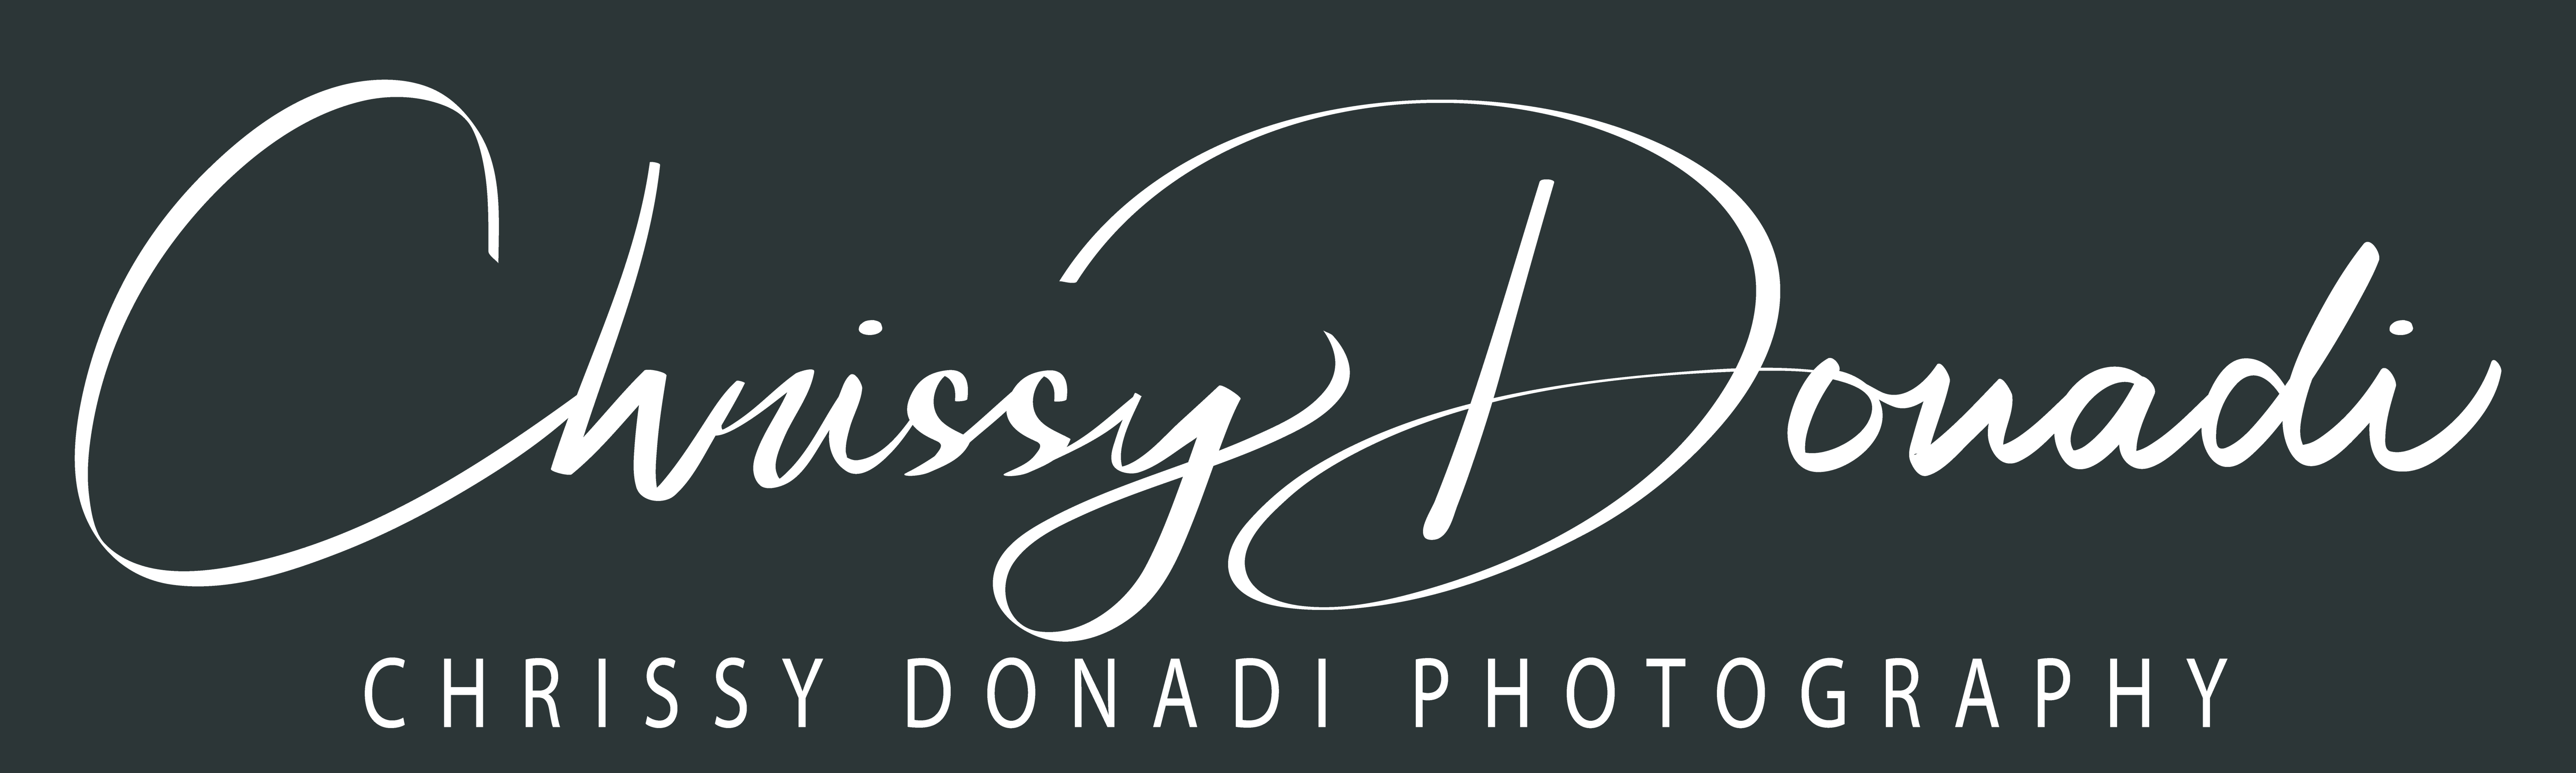 Chrissy Donadi Photography logo